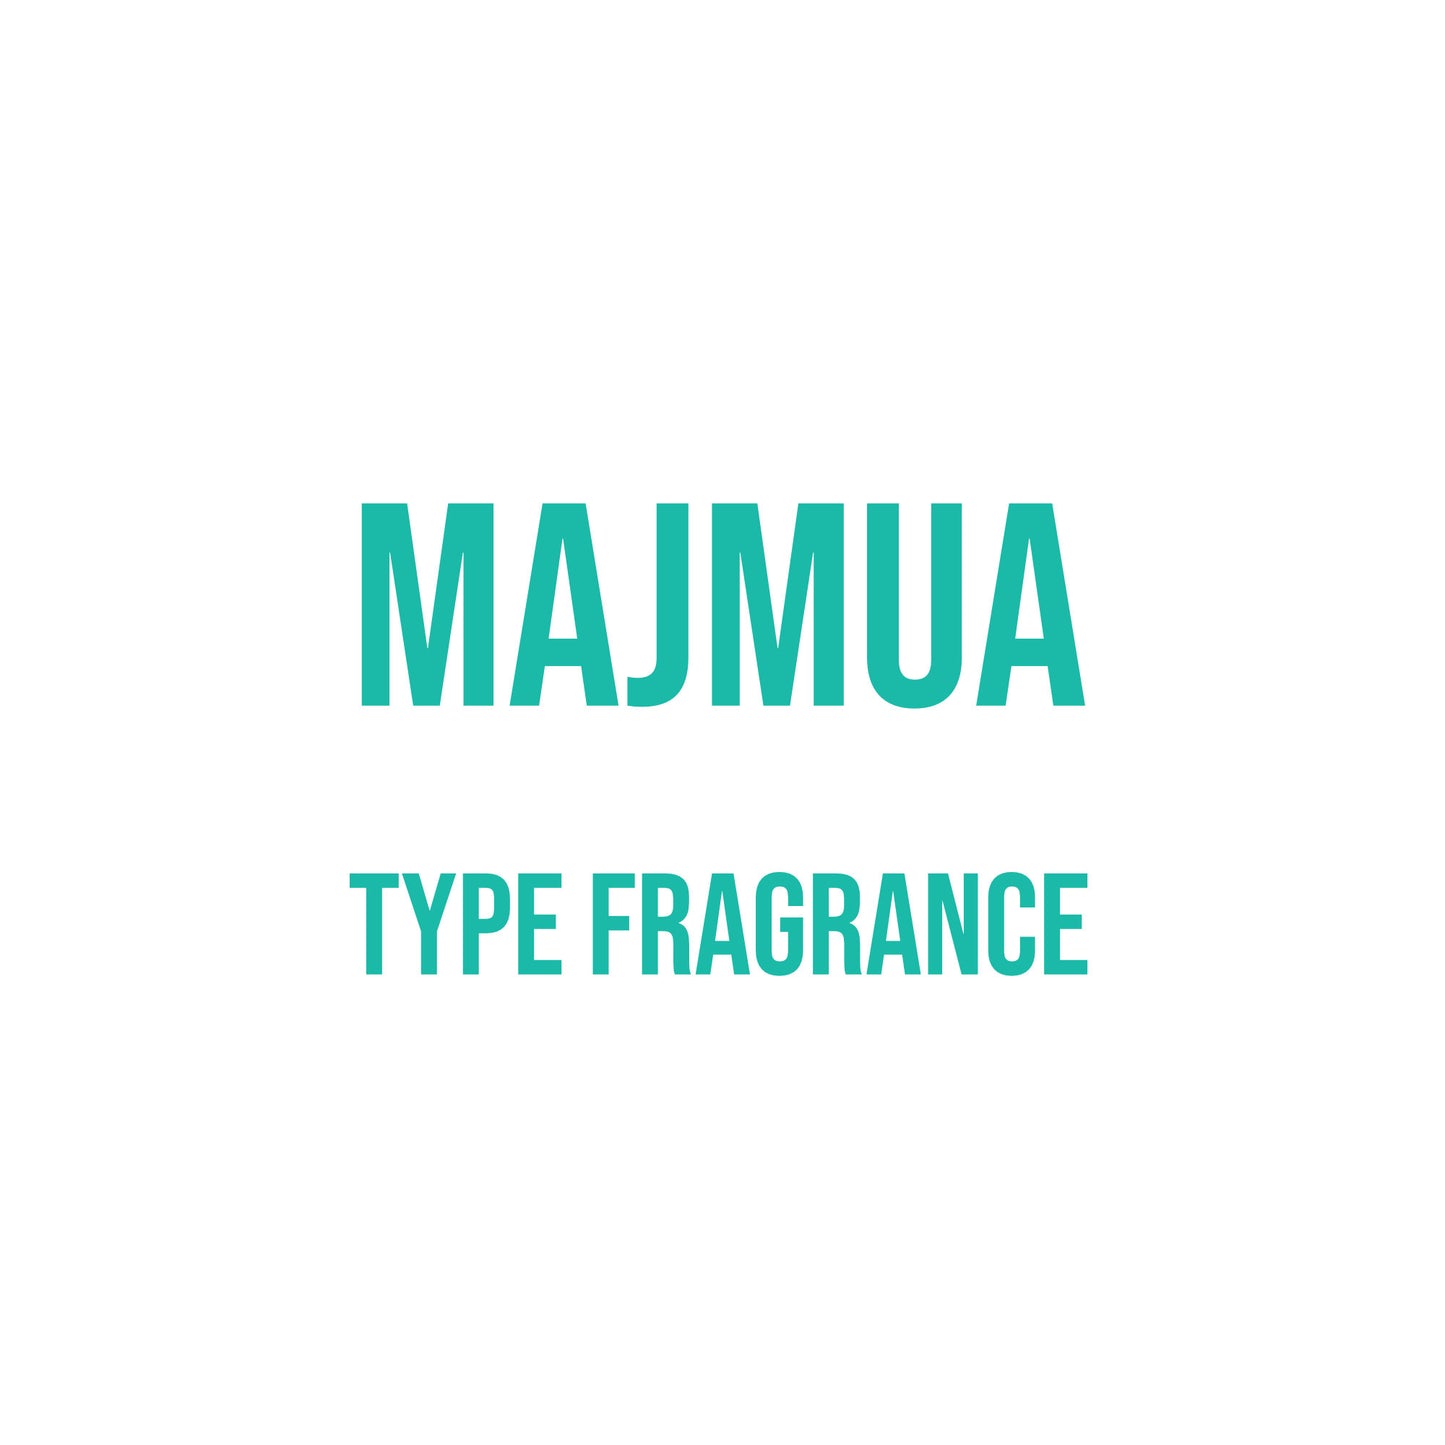 Majmua Type Fragrance